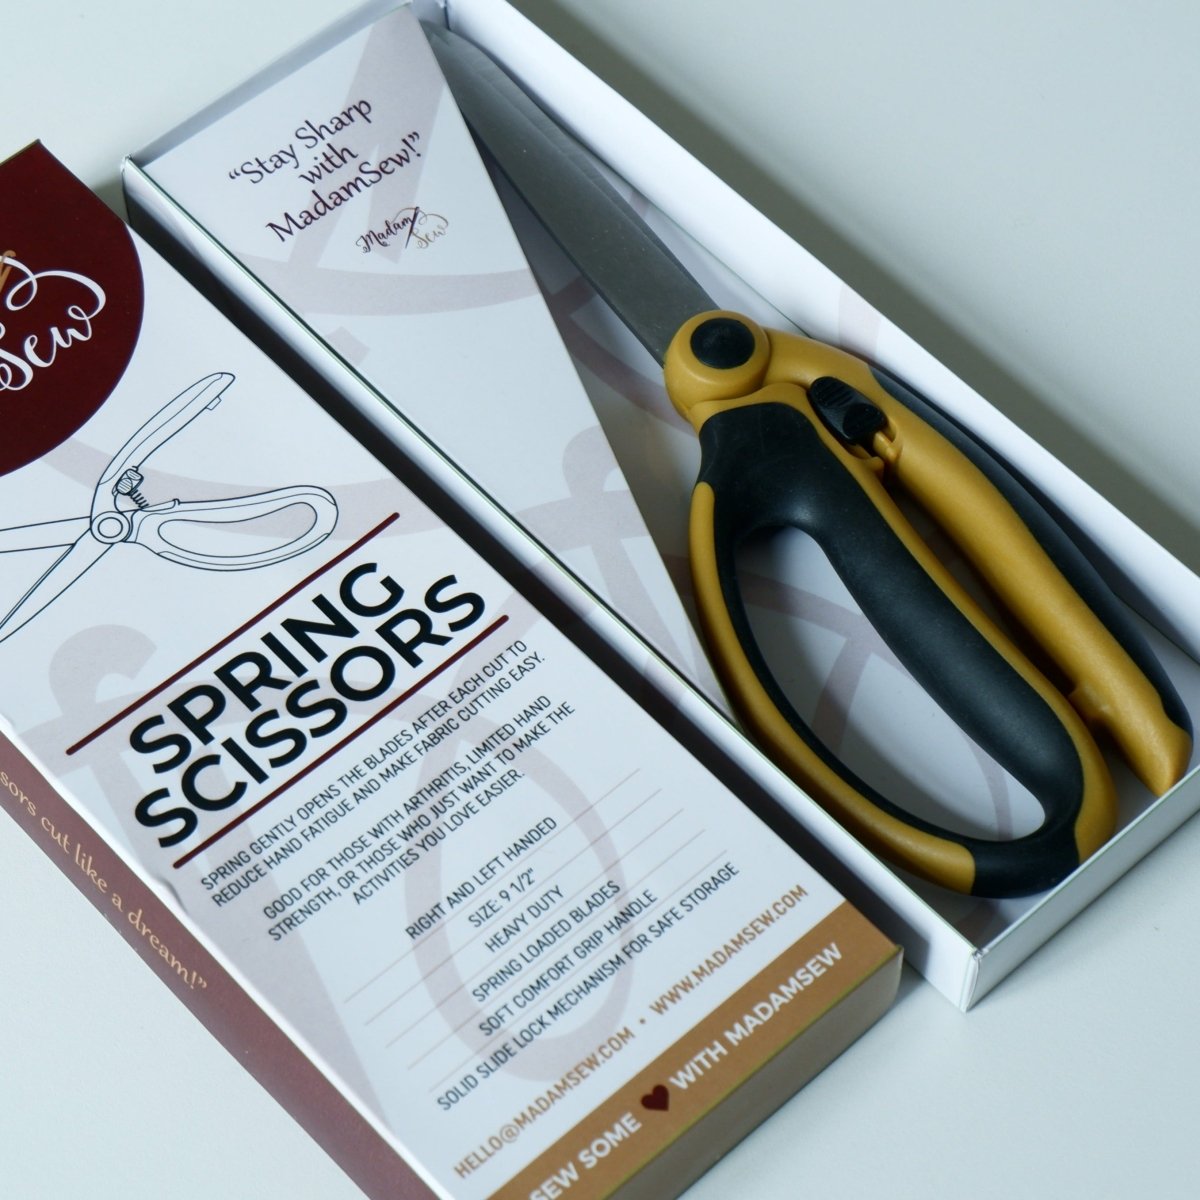 The Madam Sew spring scissors in an open box